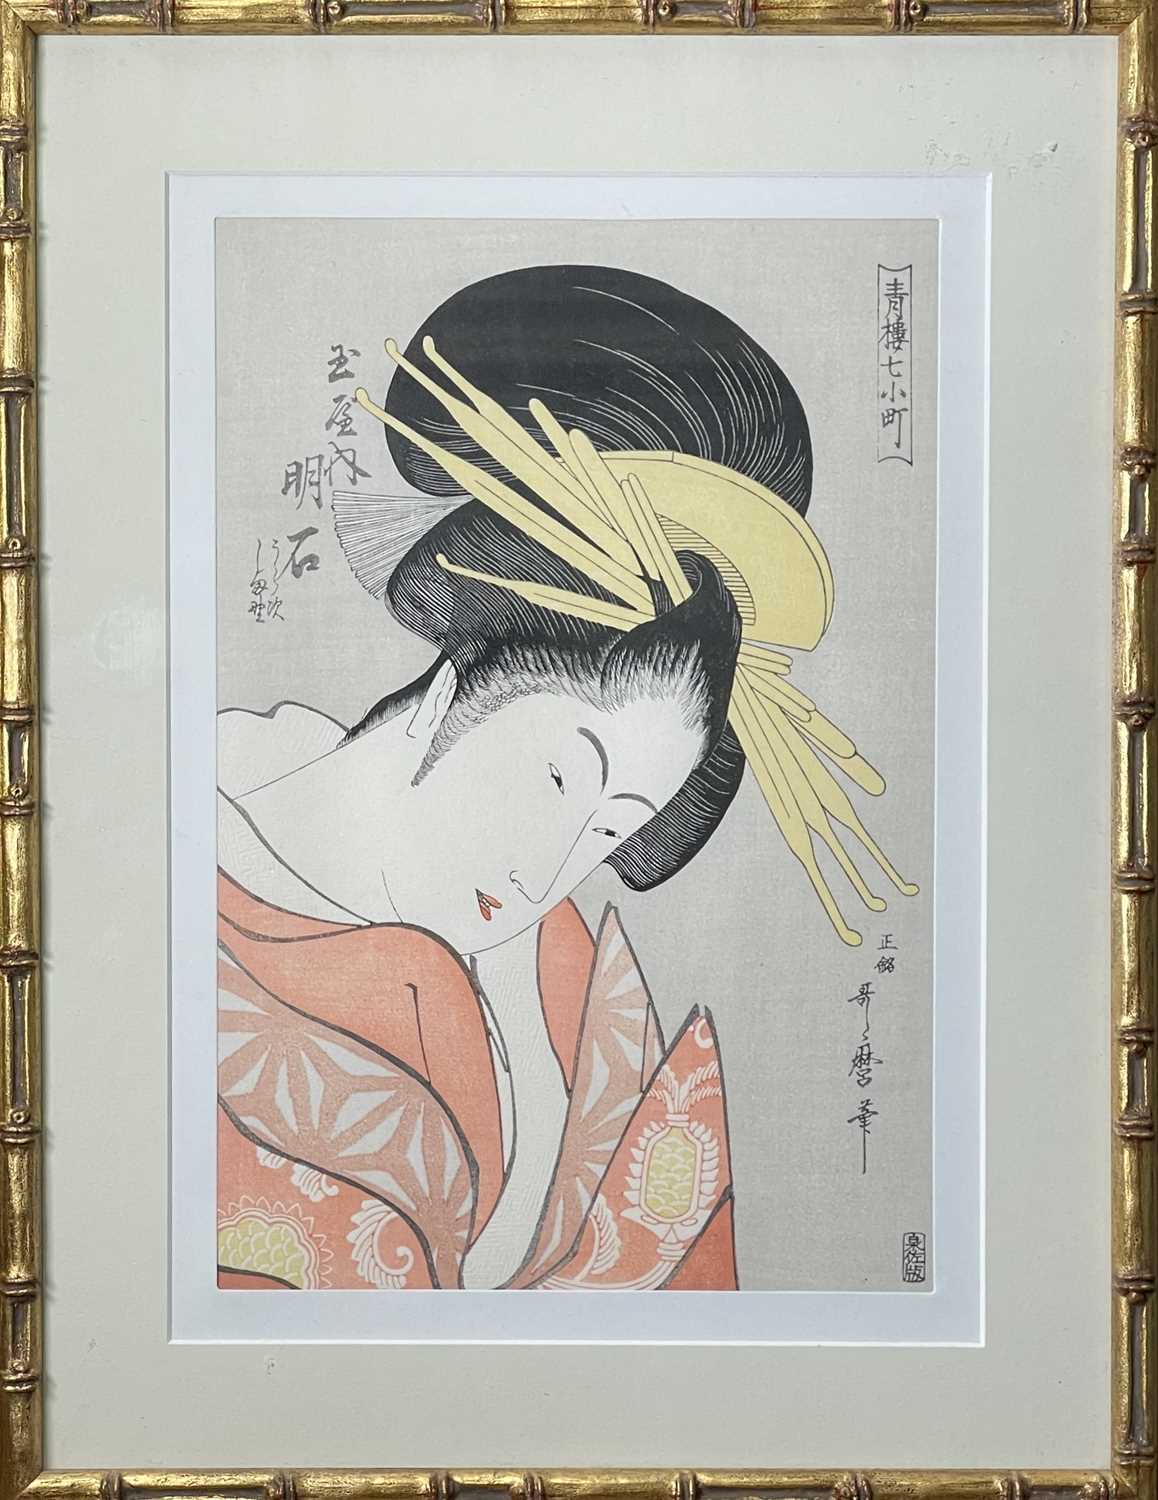 Four Japanese woodblock prints, 20th century, Kiyomitsu and Utamoro, frame size, 41 x 31.5cm. - Image 8 of 9